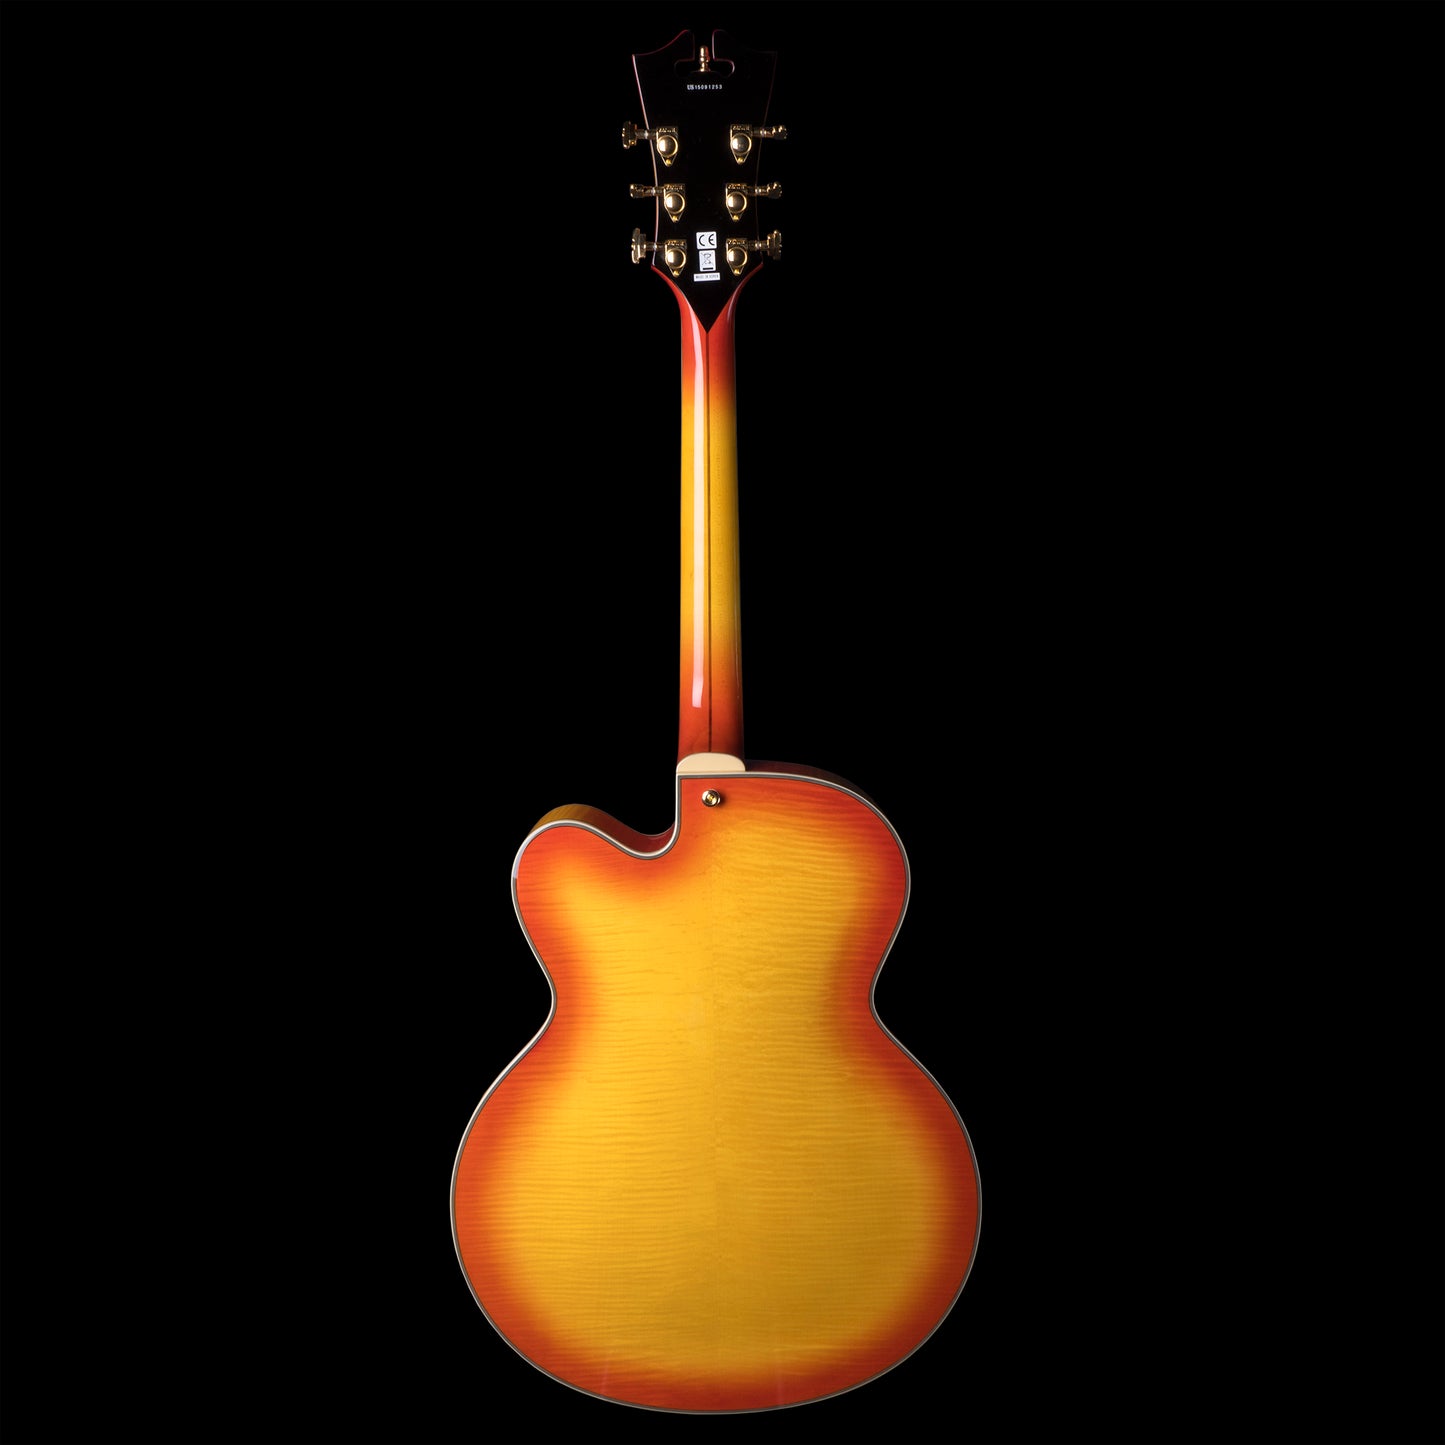 D'Angelico EX-59 Hollow Body Sunburst Electric Guitar w/ Case (EX59SB)